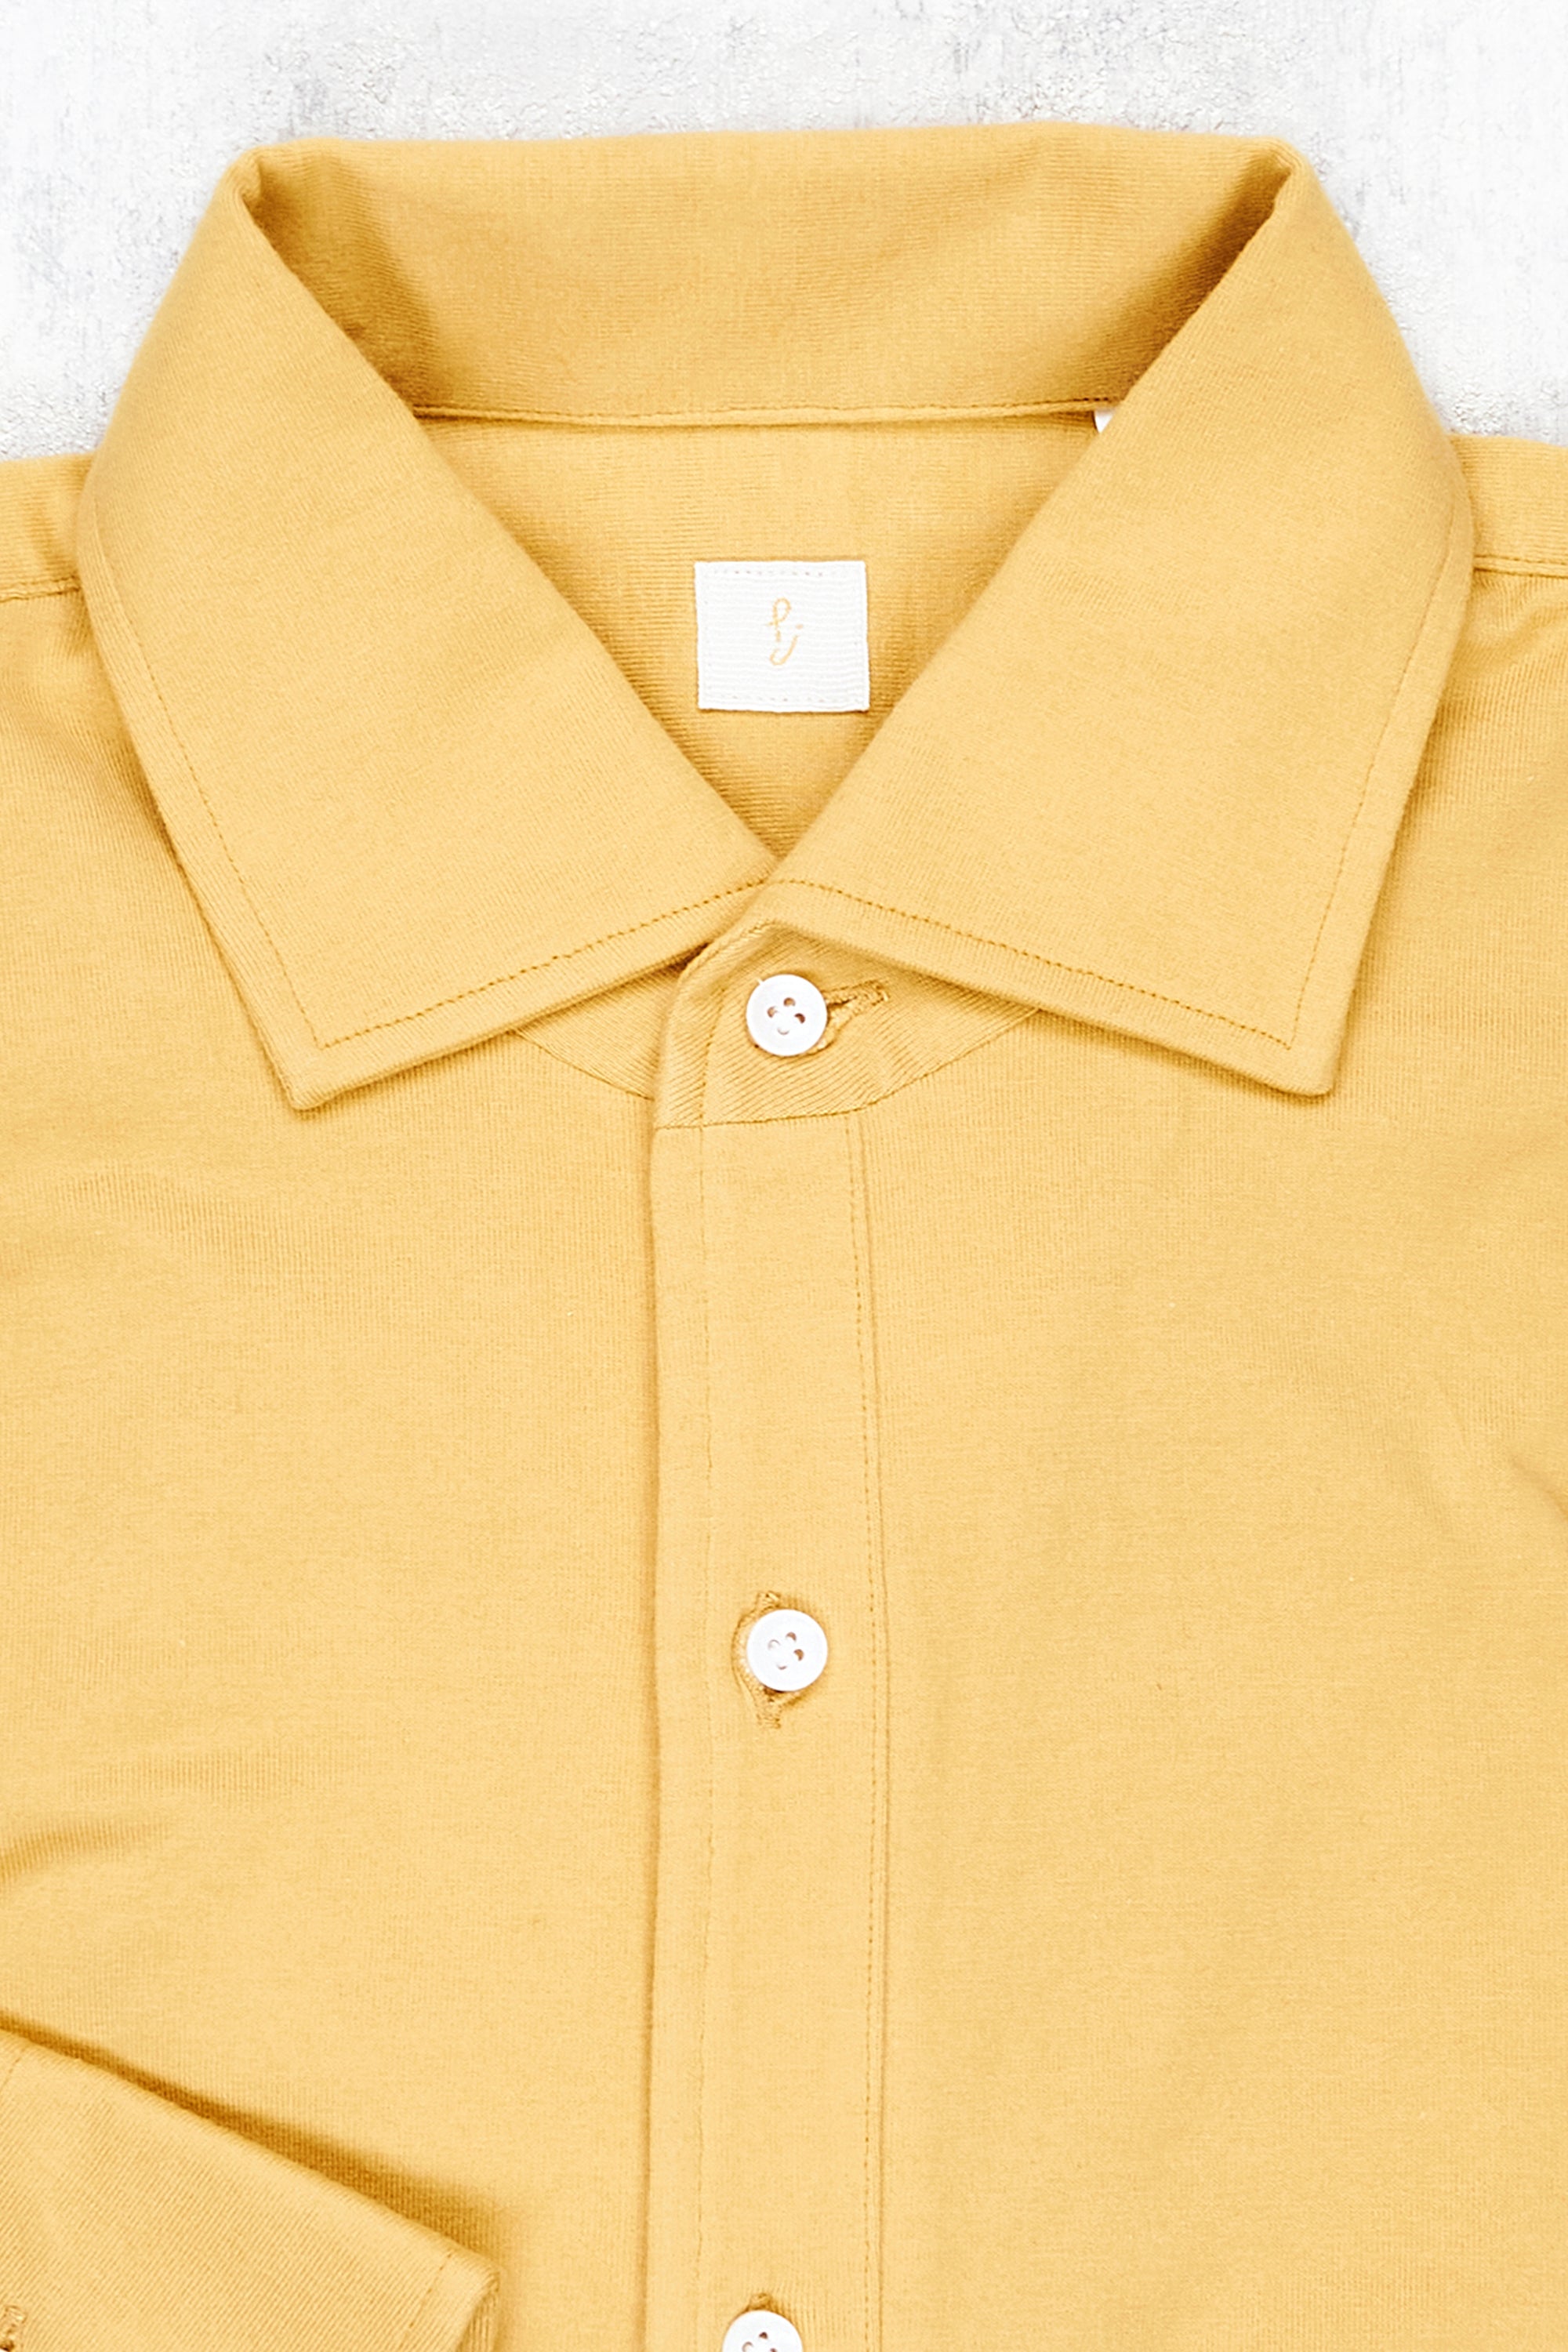 Patrick Johnson Sand Cotton Jersey Long Sleeve Portsea Collar Polo Shirt